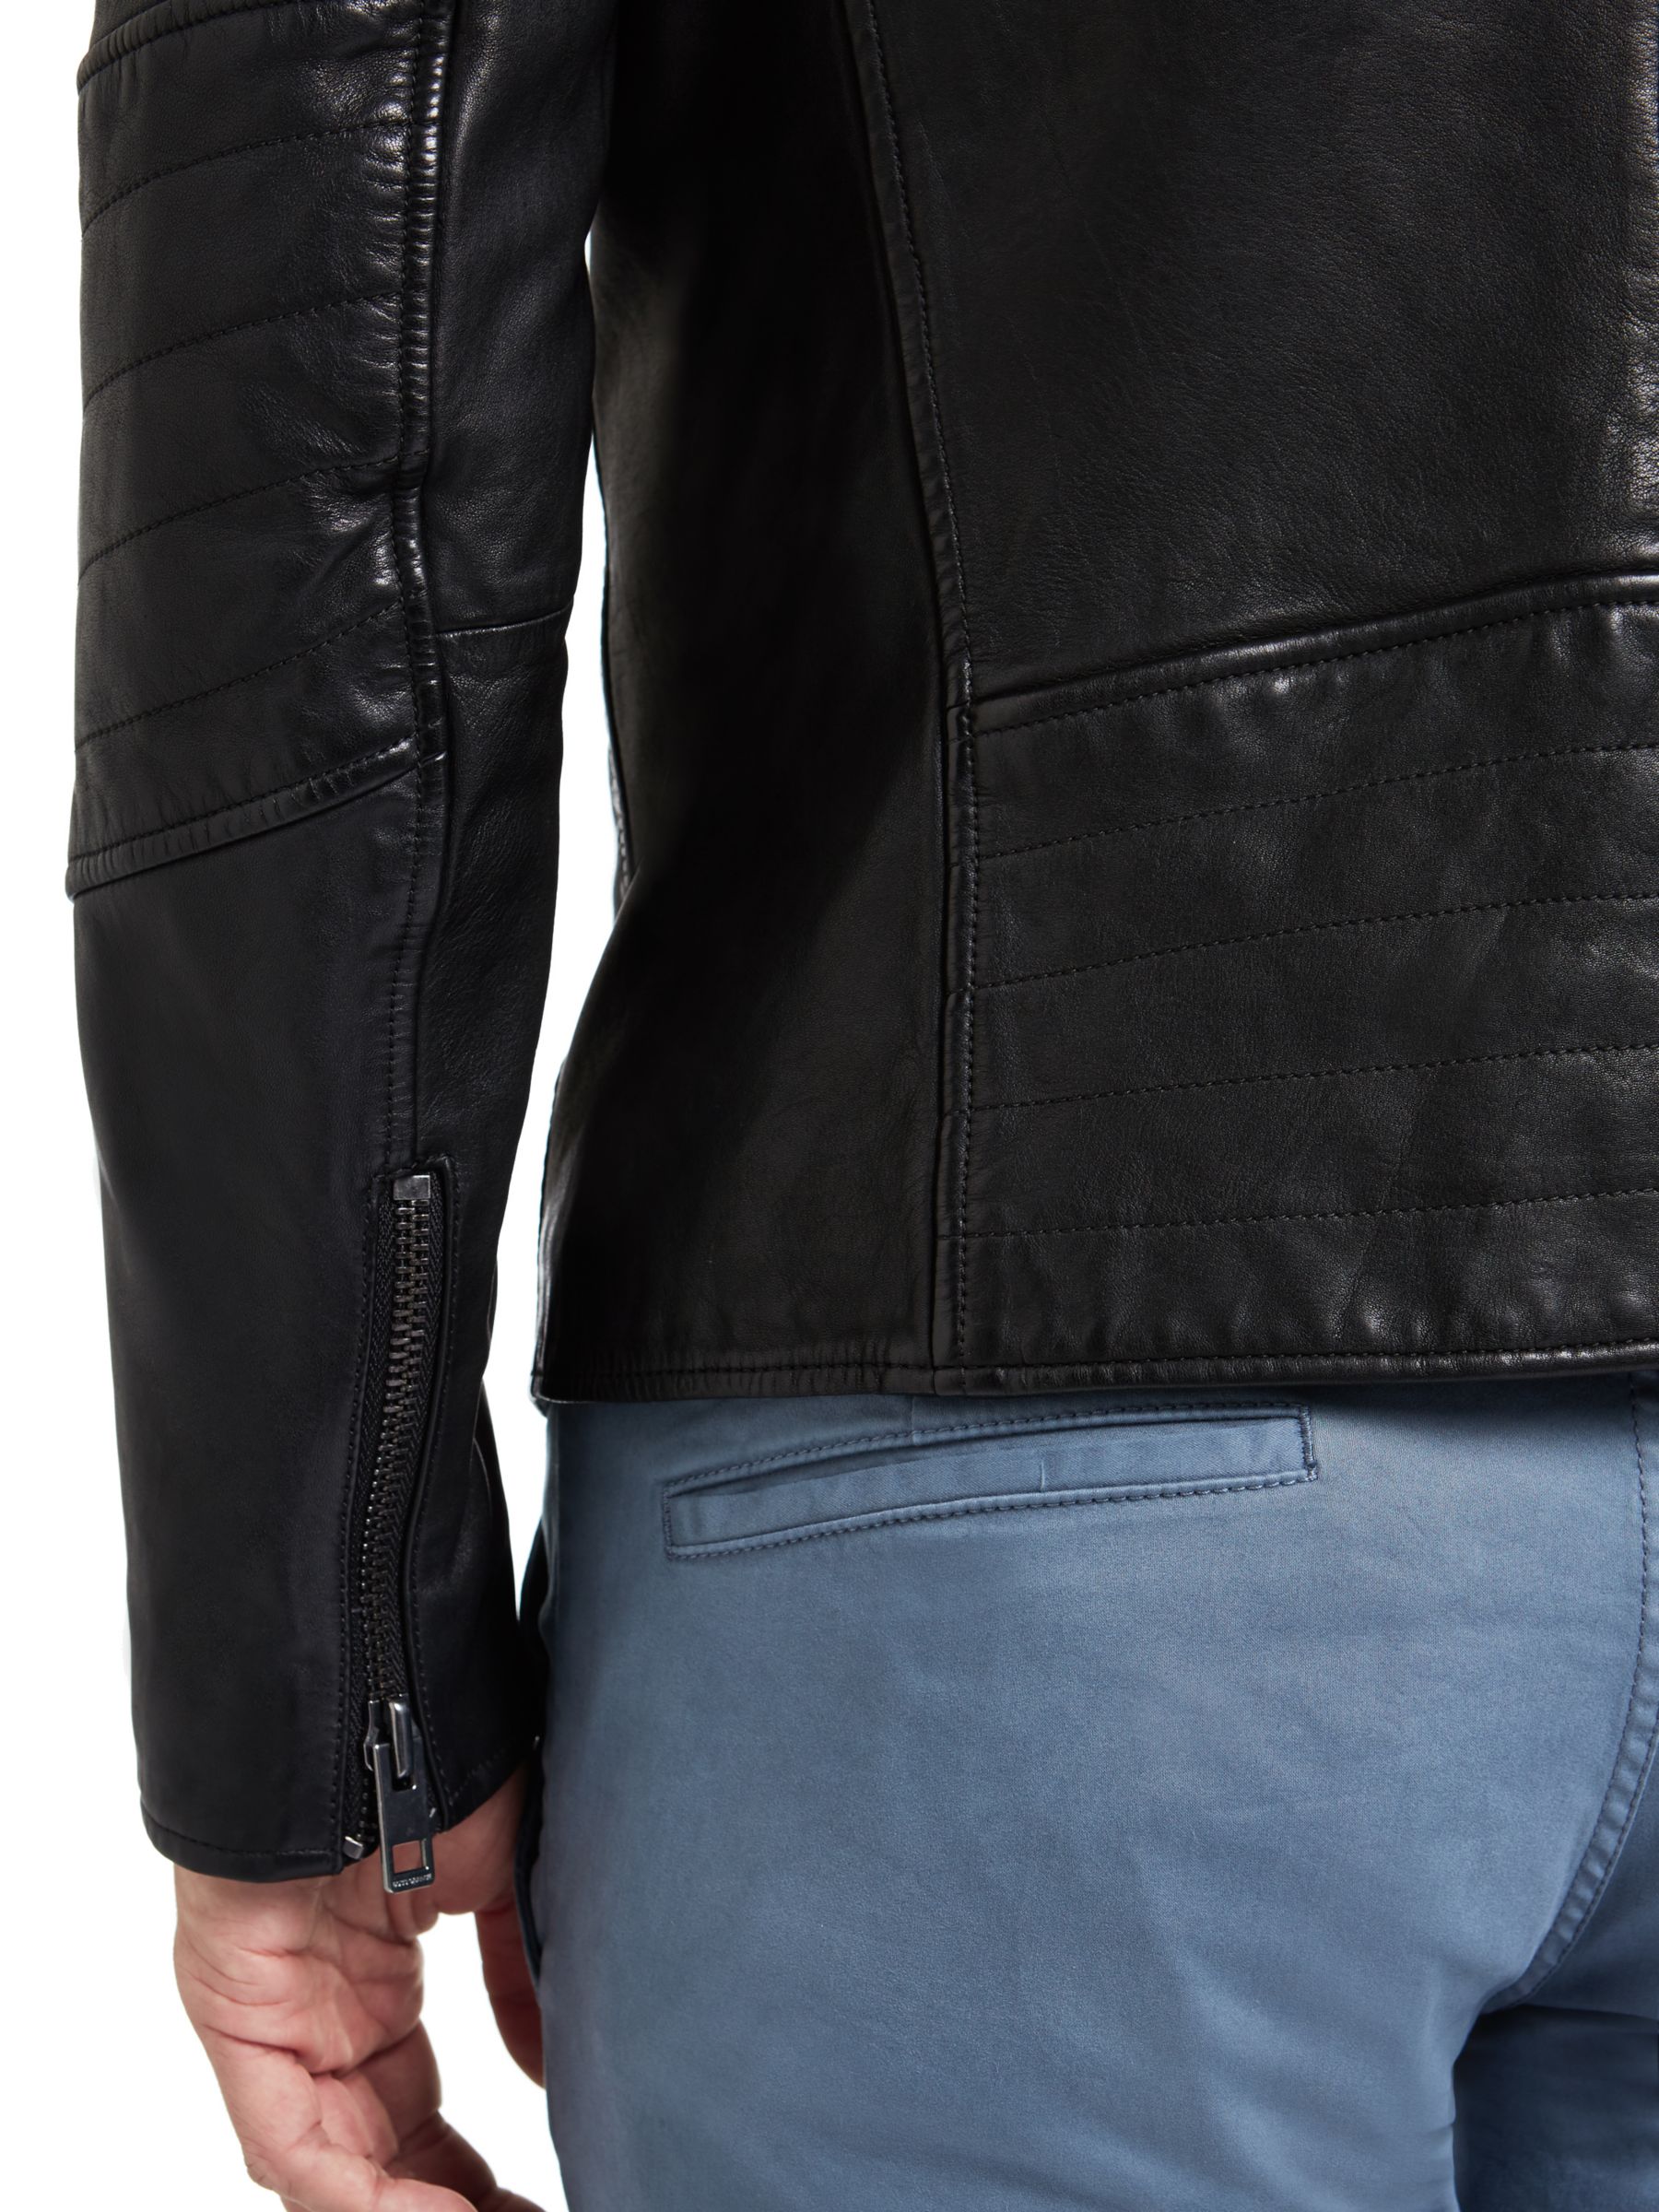 hugo boss jeeper leather jacket